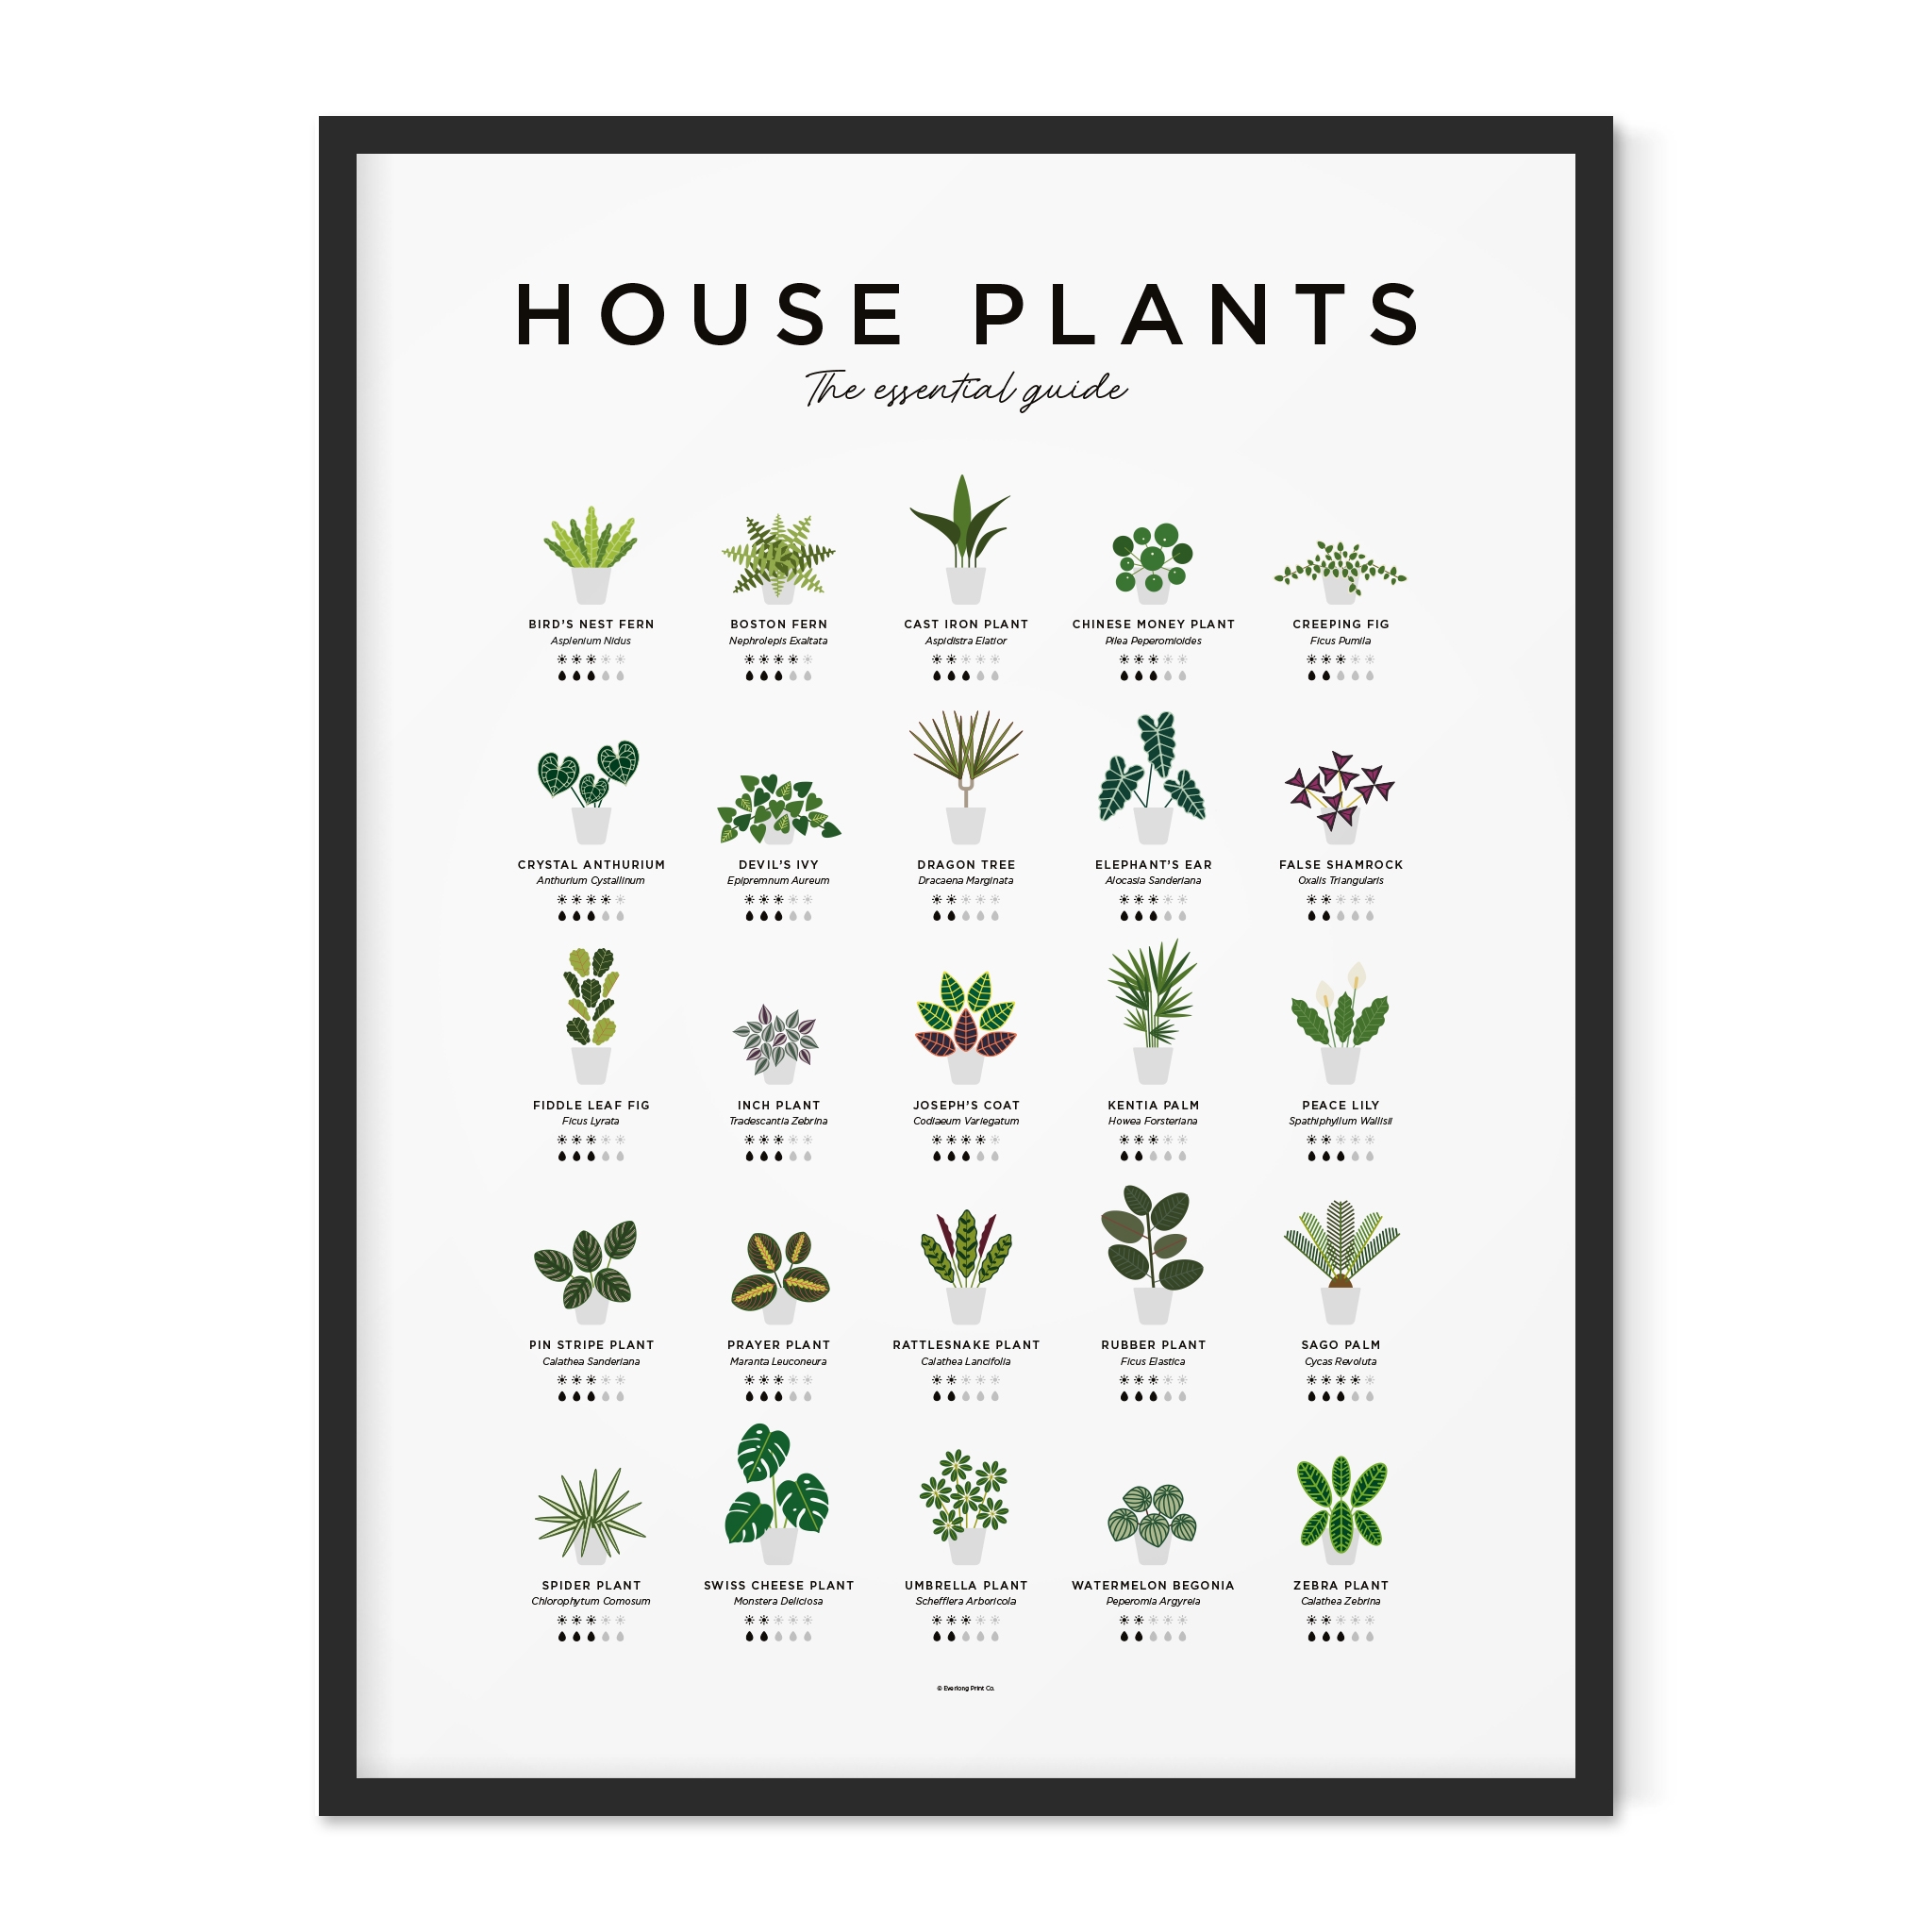 Everlong Print Co. House Plant Guide